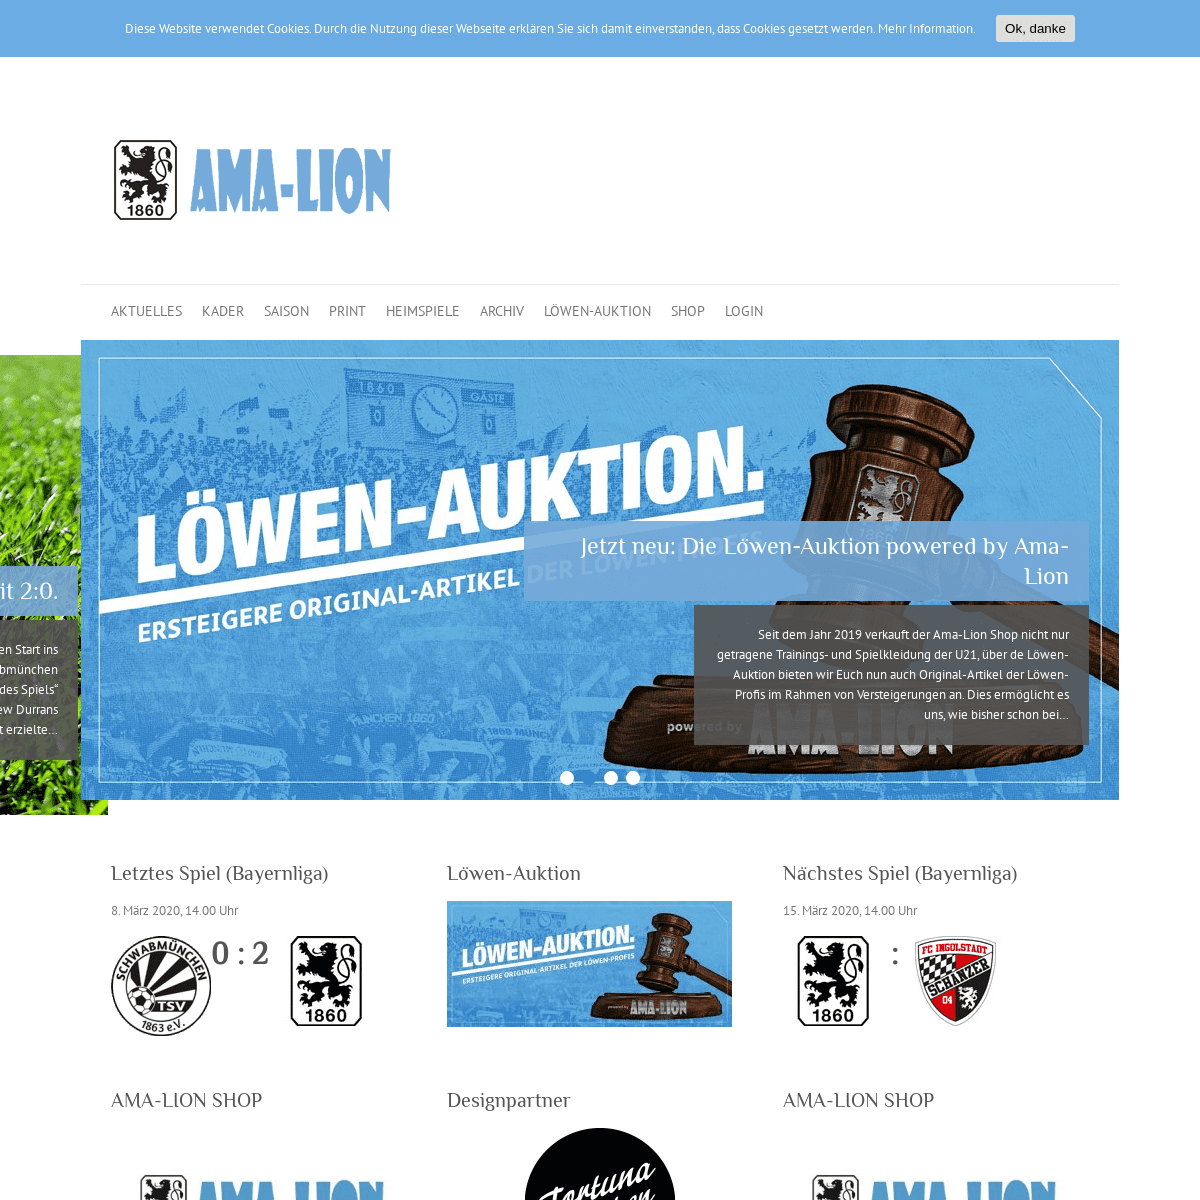 A complete backup of ama-lion.com